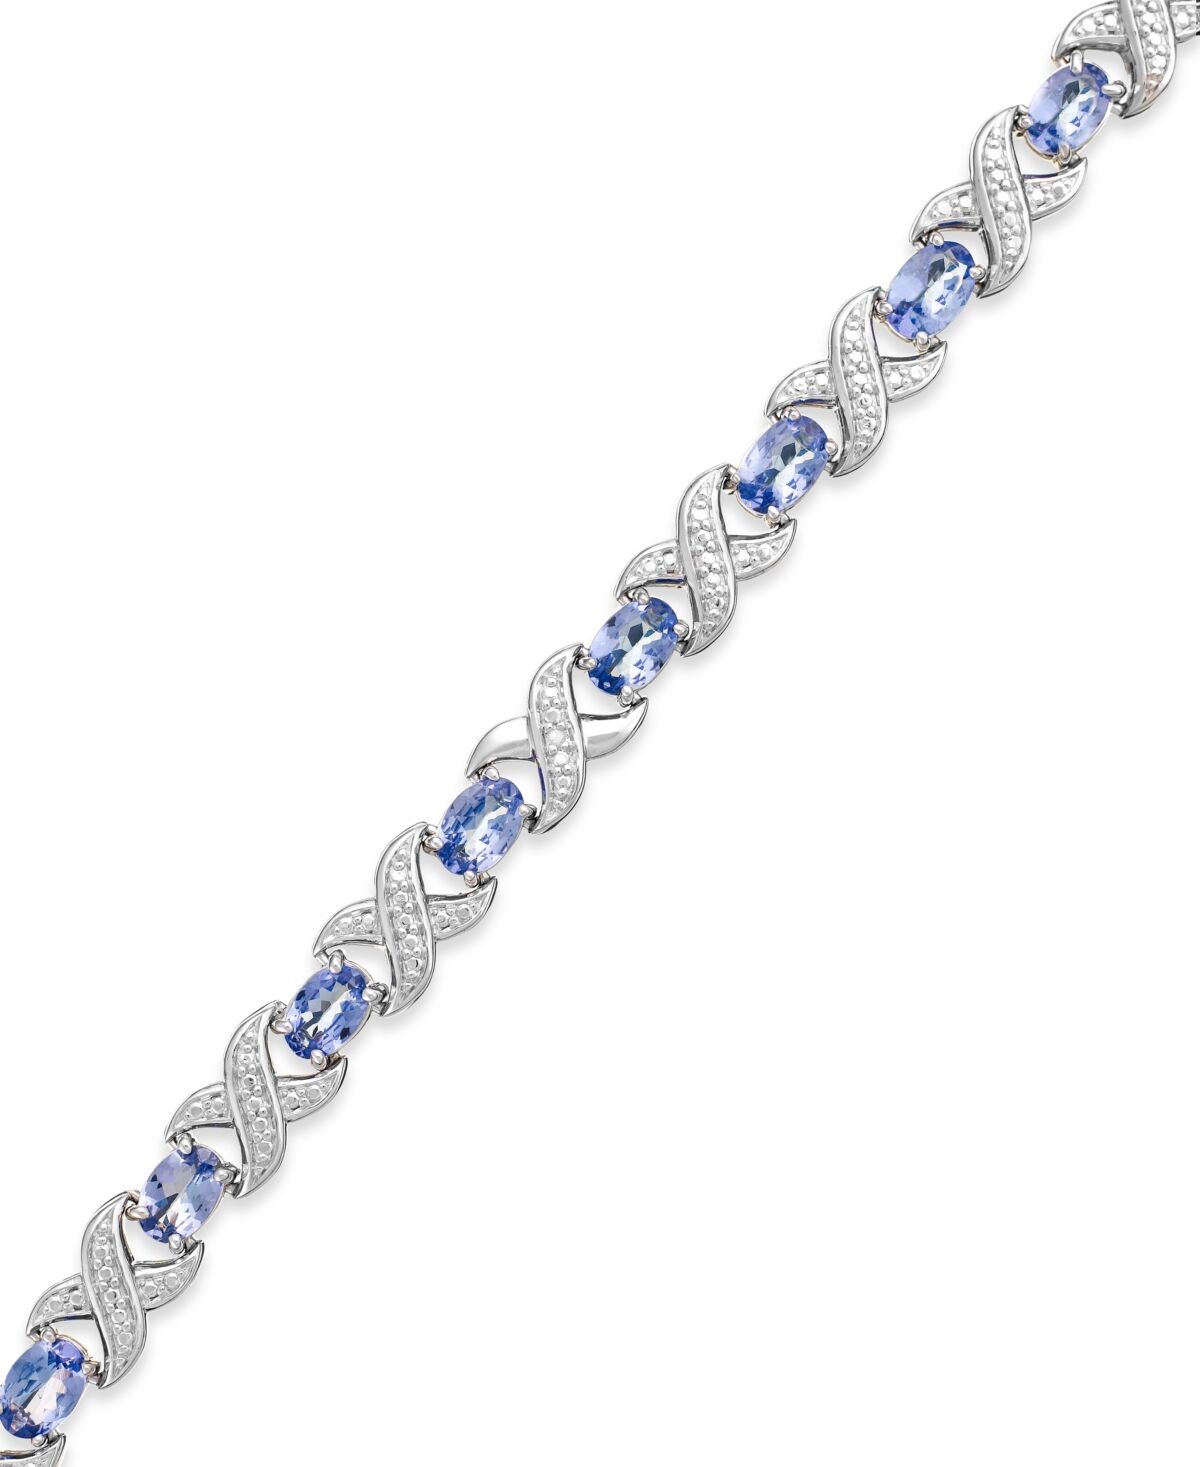 Macy's Gemstone and Diamond Accent Xo Bracelet in Sterling Silver - Tanzanite